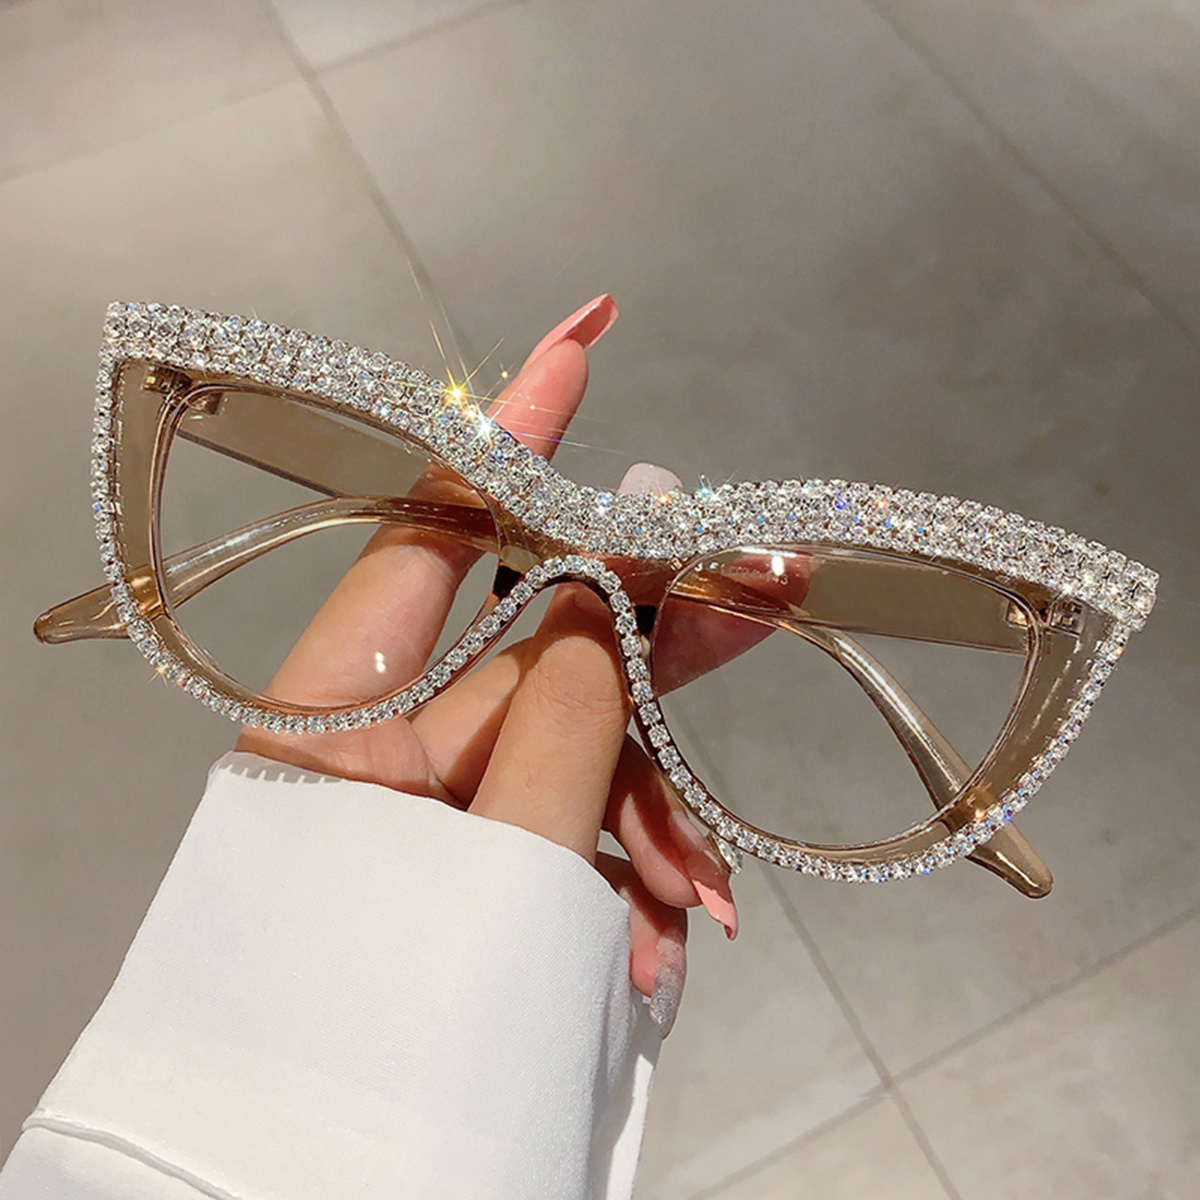 Bling Glasses, Optical Crystal Cat Eye Glasses, Eyewear